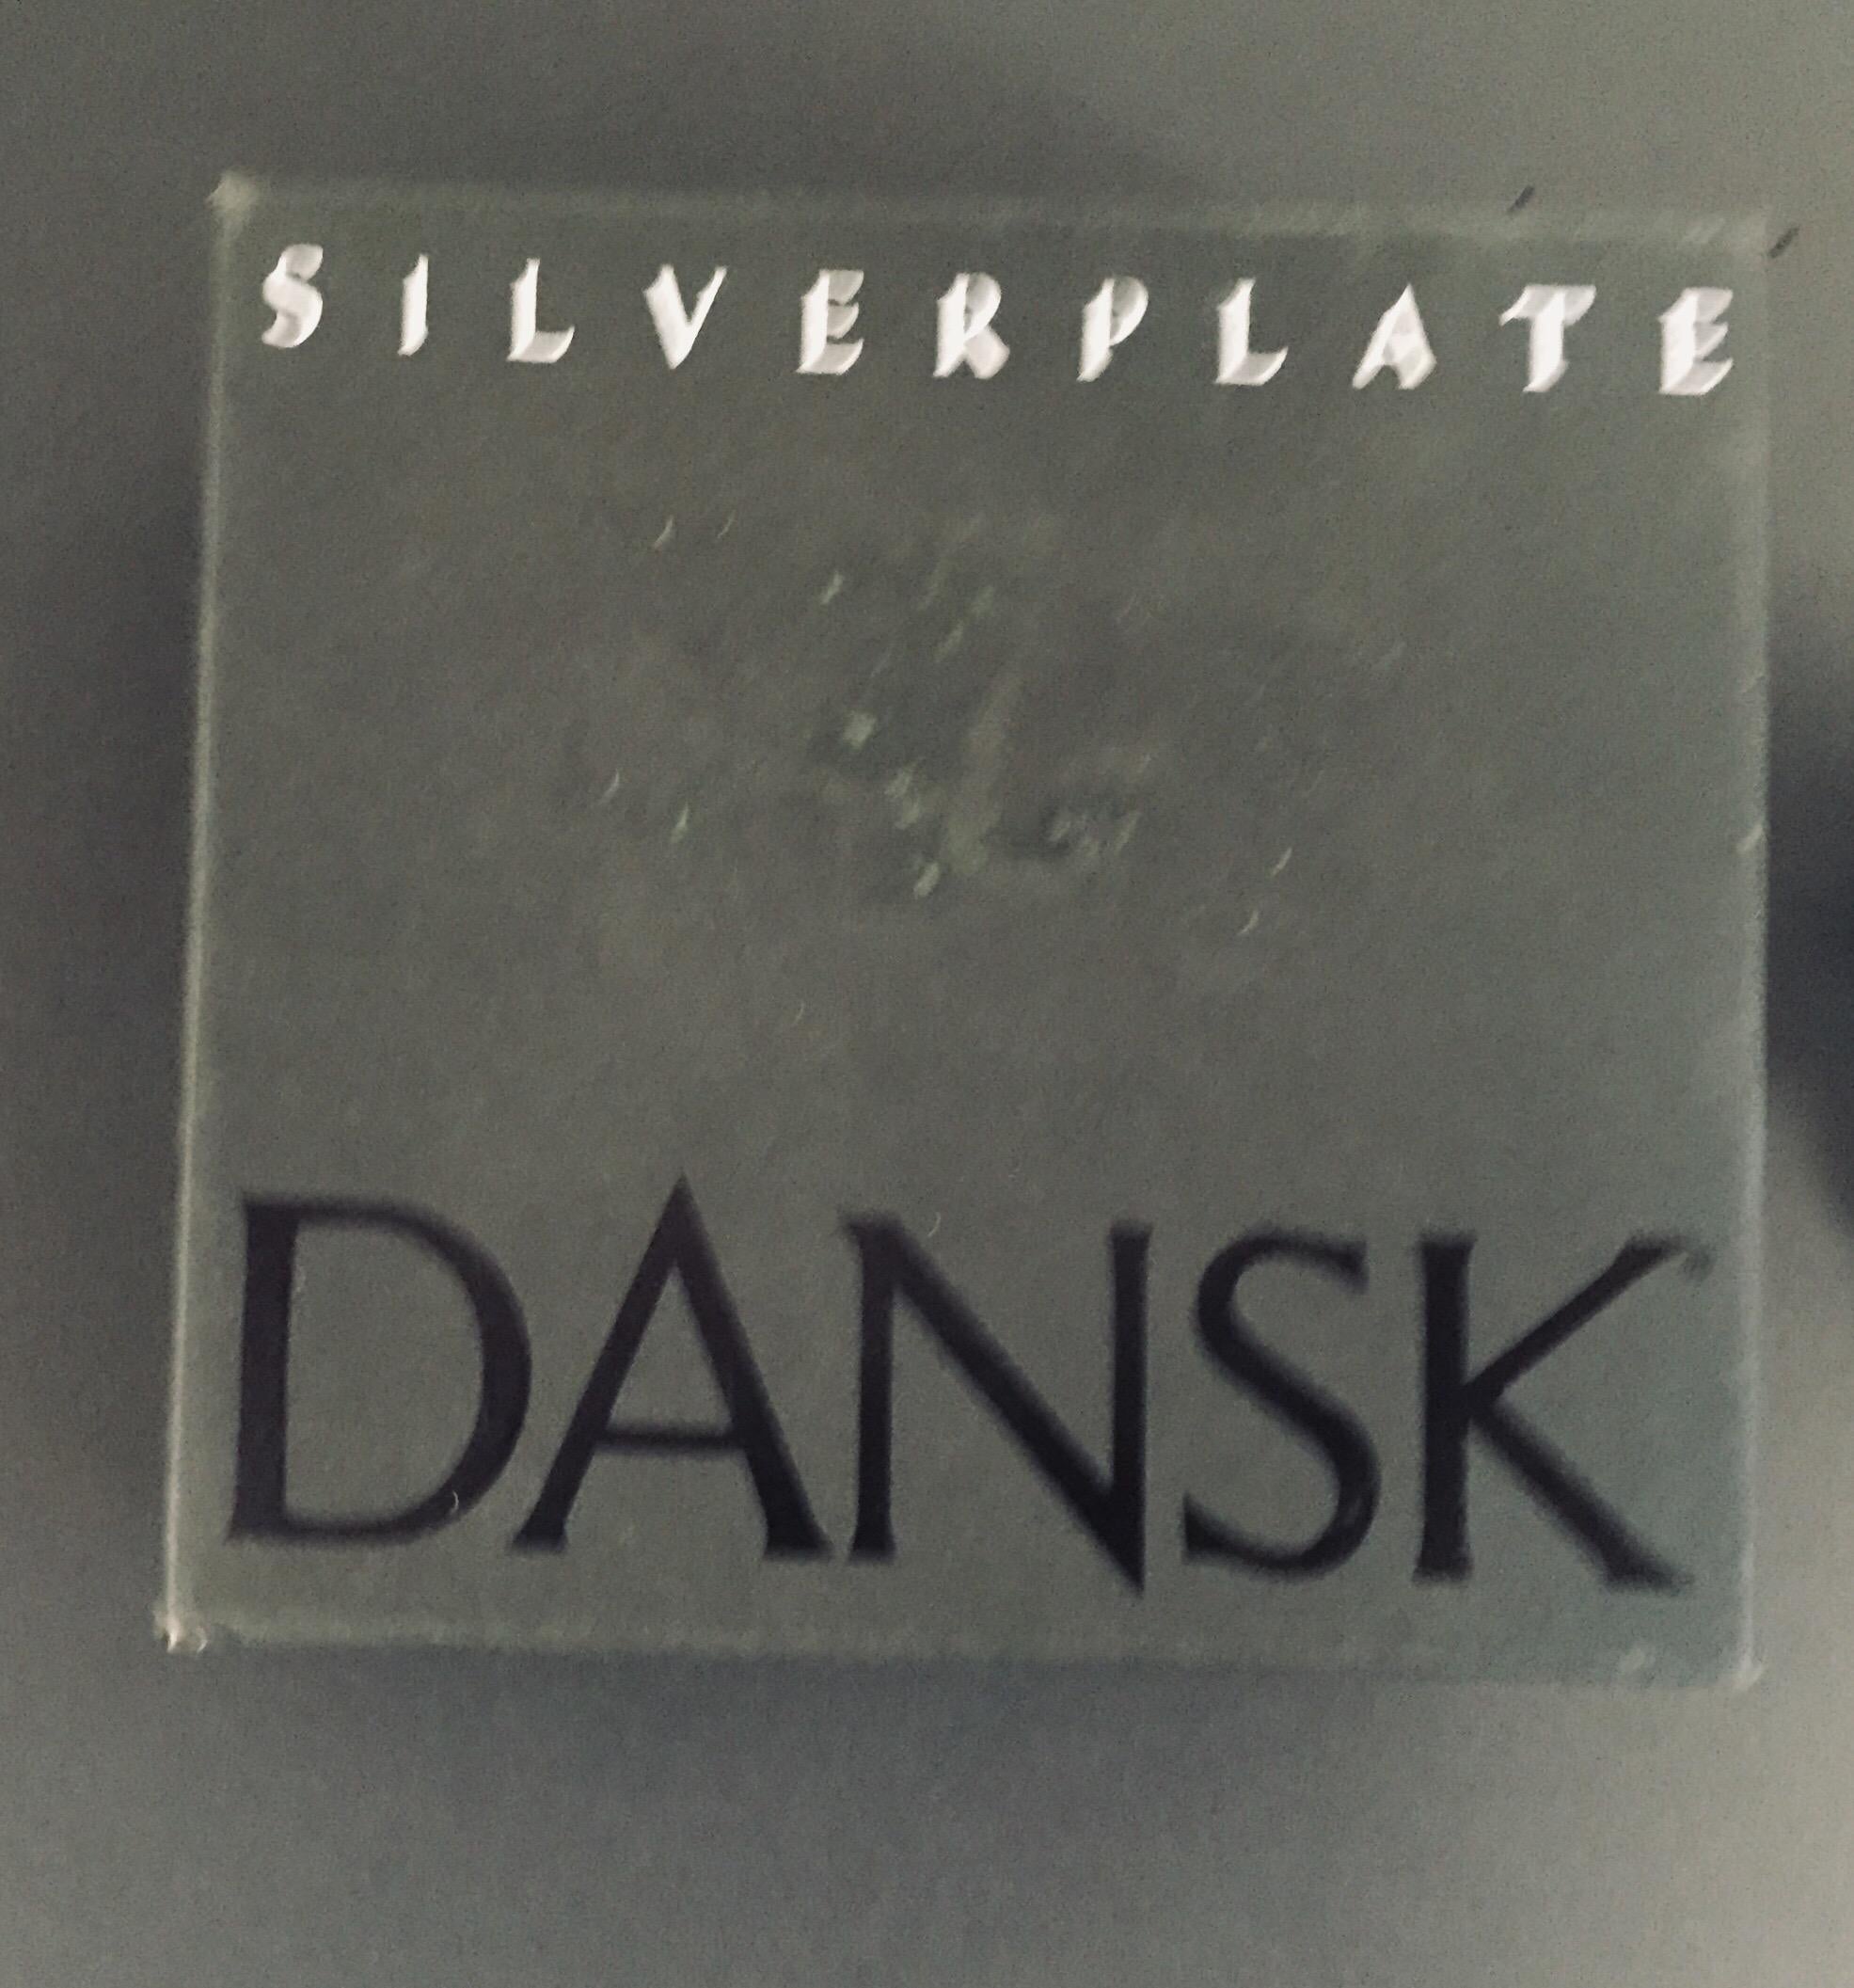 1970s Dansk Animals Paperweights Silver Plated by Gunnar Cyren 2